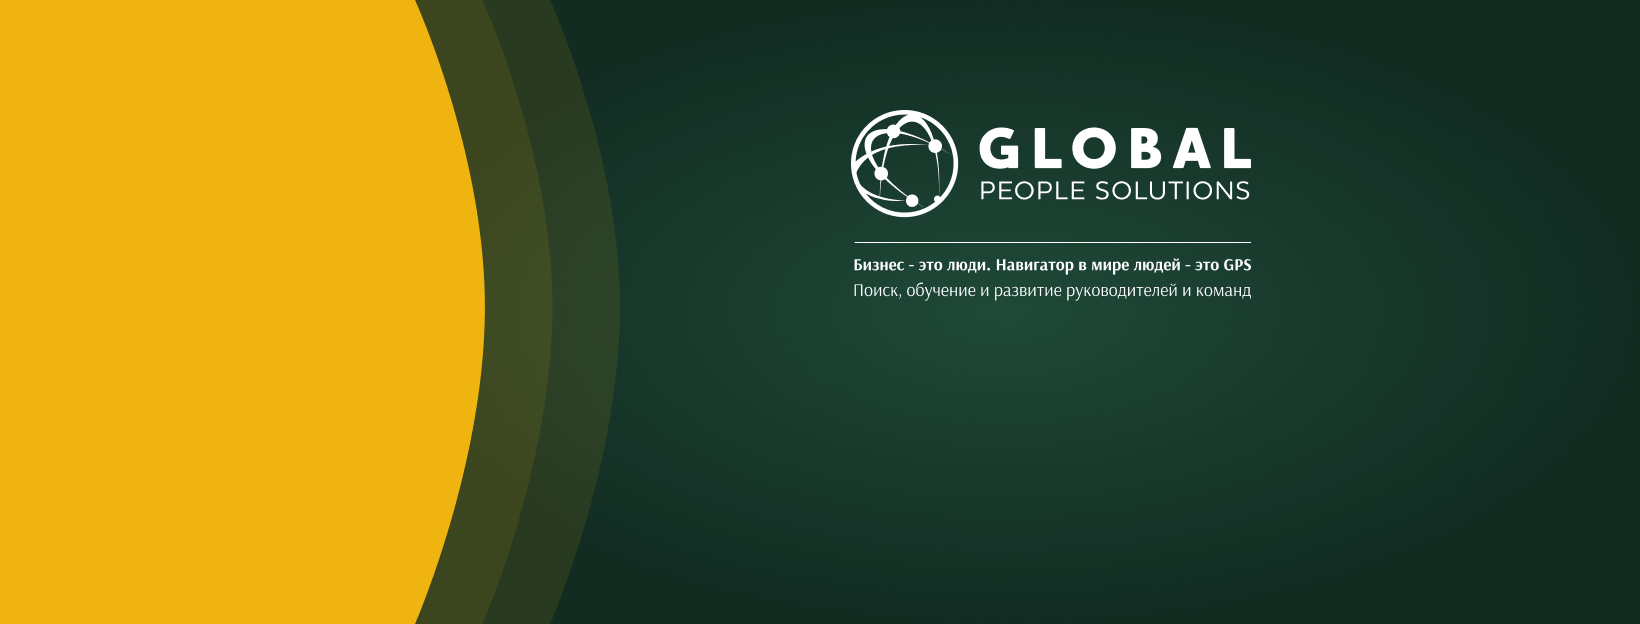 Global people solutions. Солюшен Москва консалтинг. SCALENEWORKS people solutions. People solutions International Georgia. Solutions inter